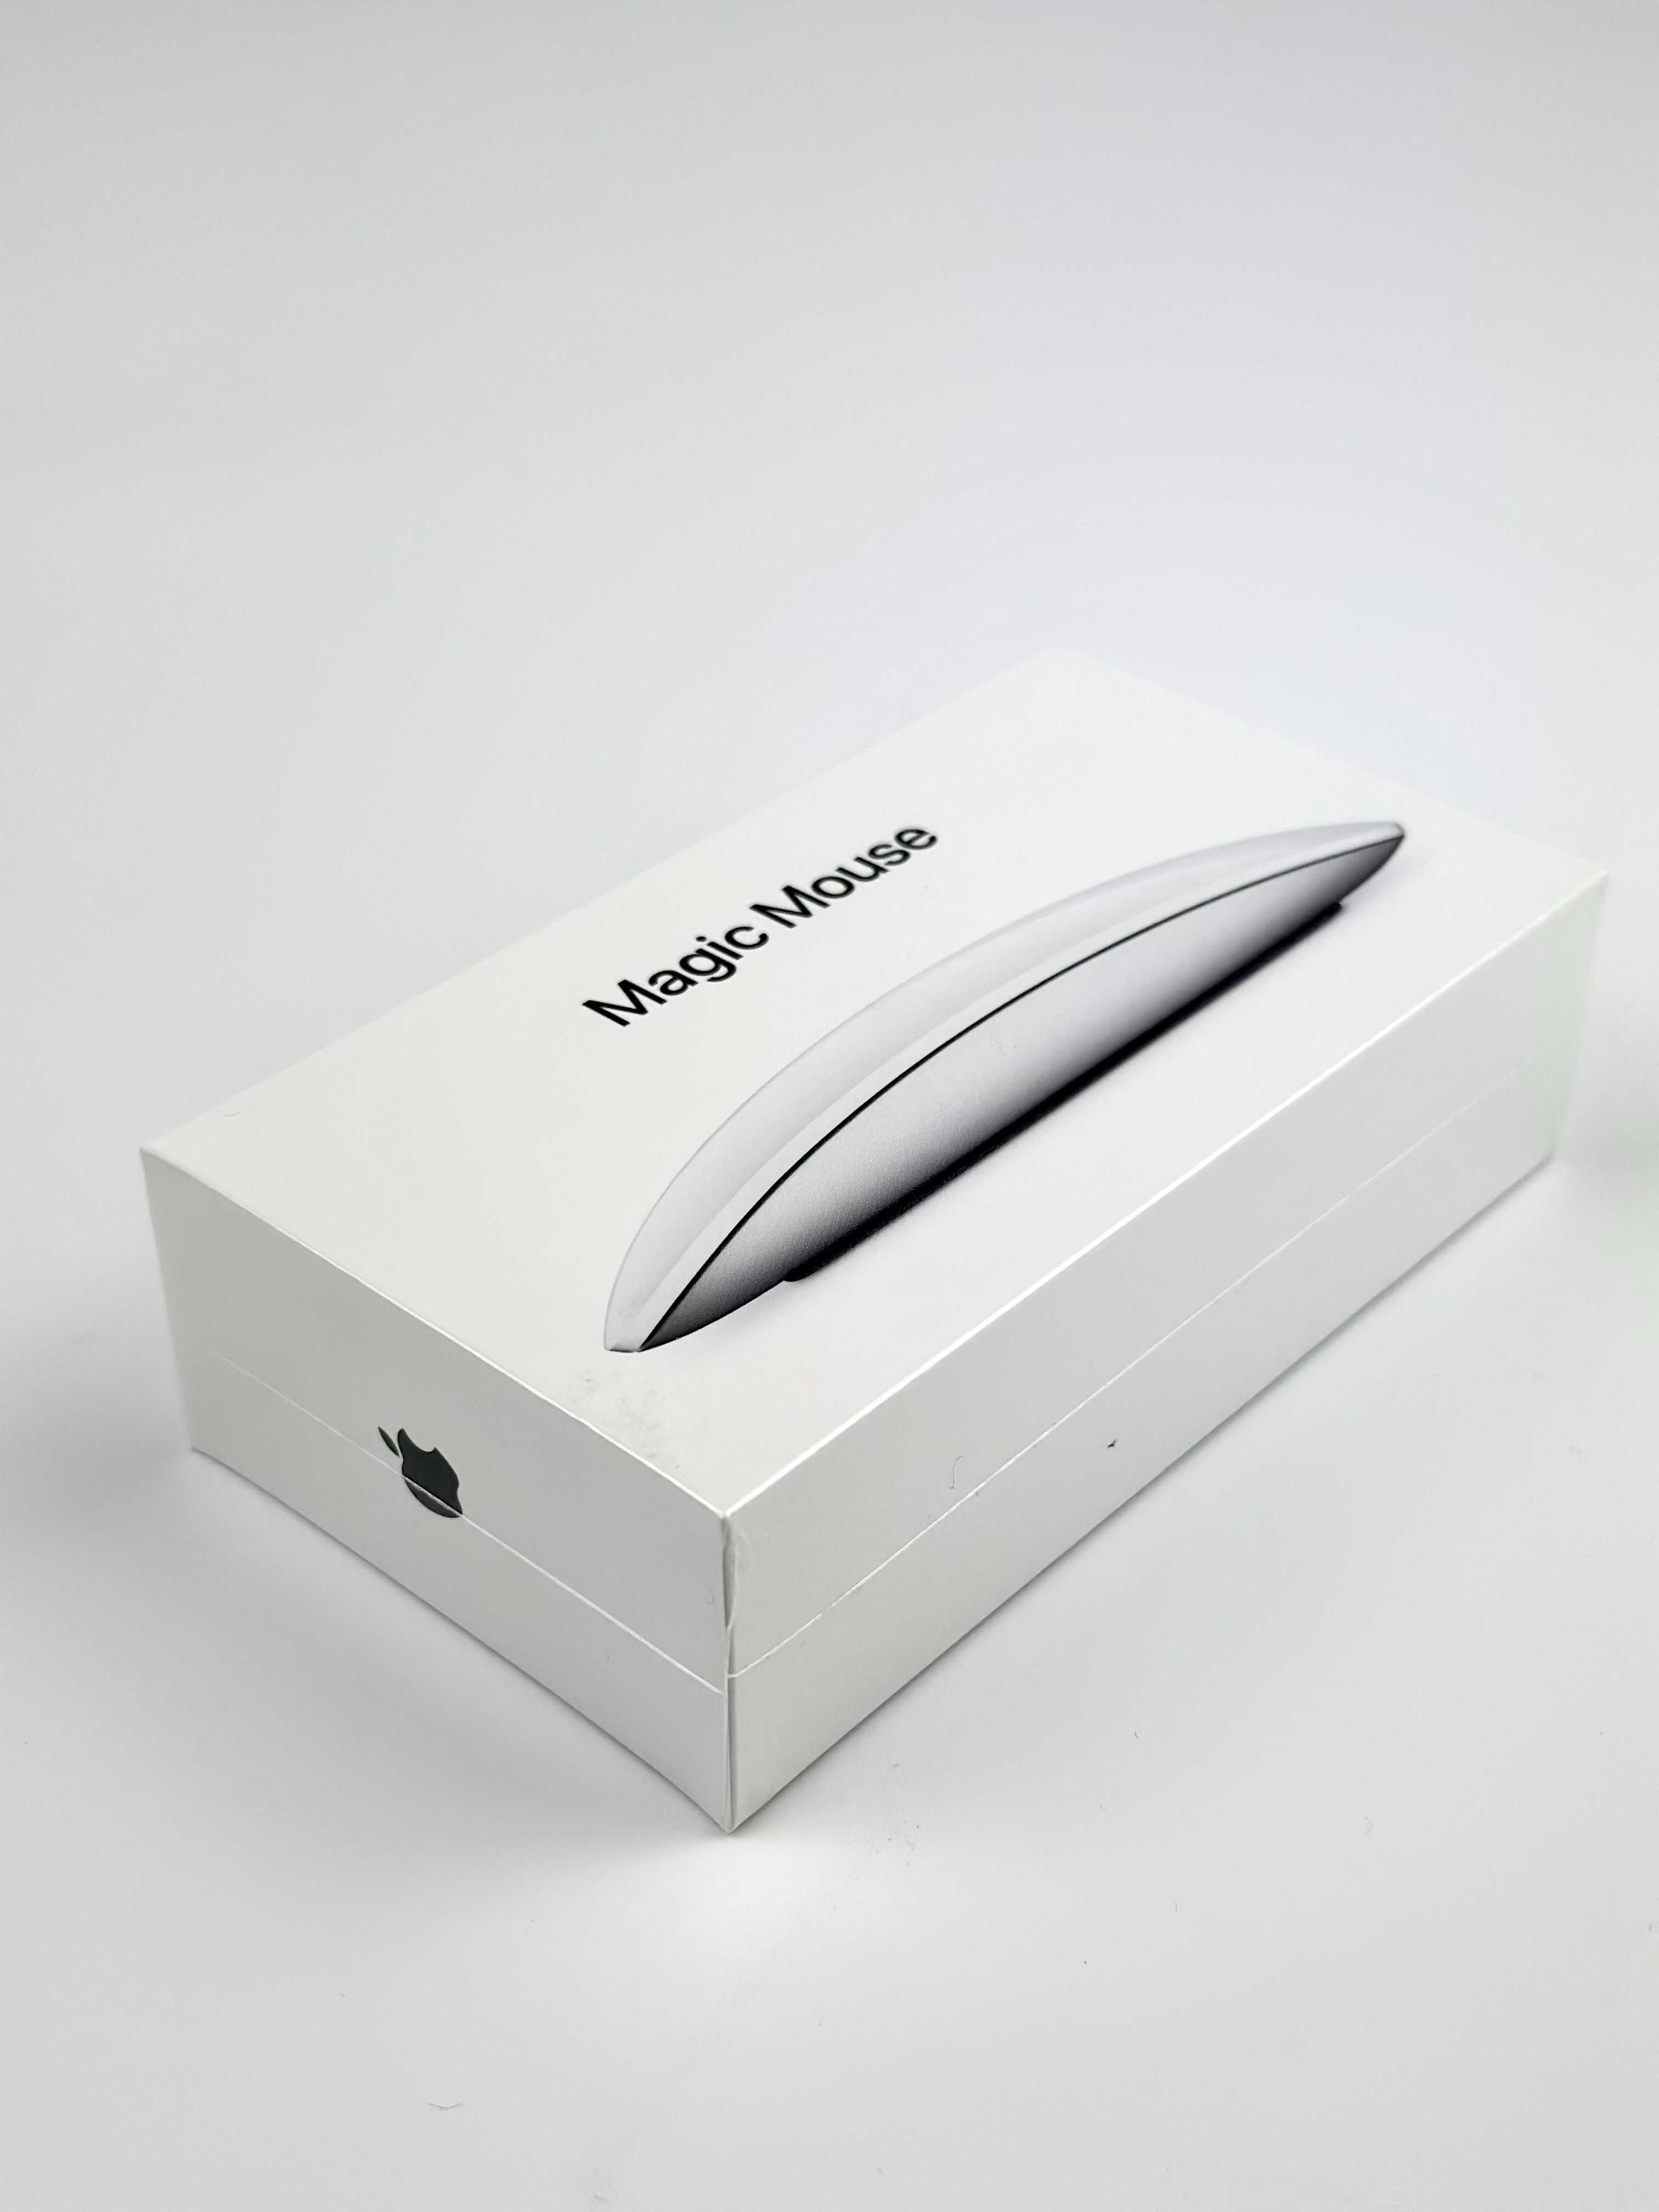 Apple Magic Mouse obszar Multi-Touch / White /Gwarancja / Sklep